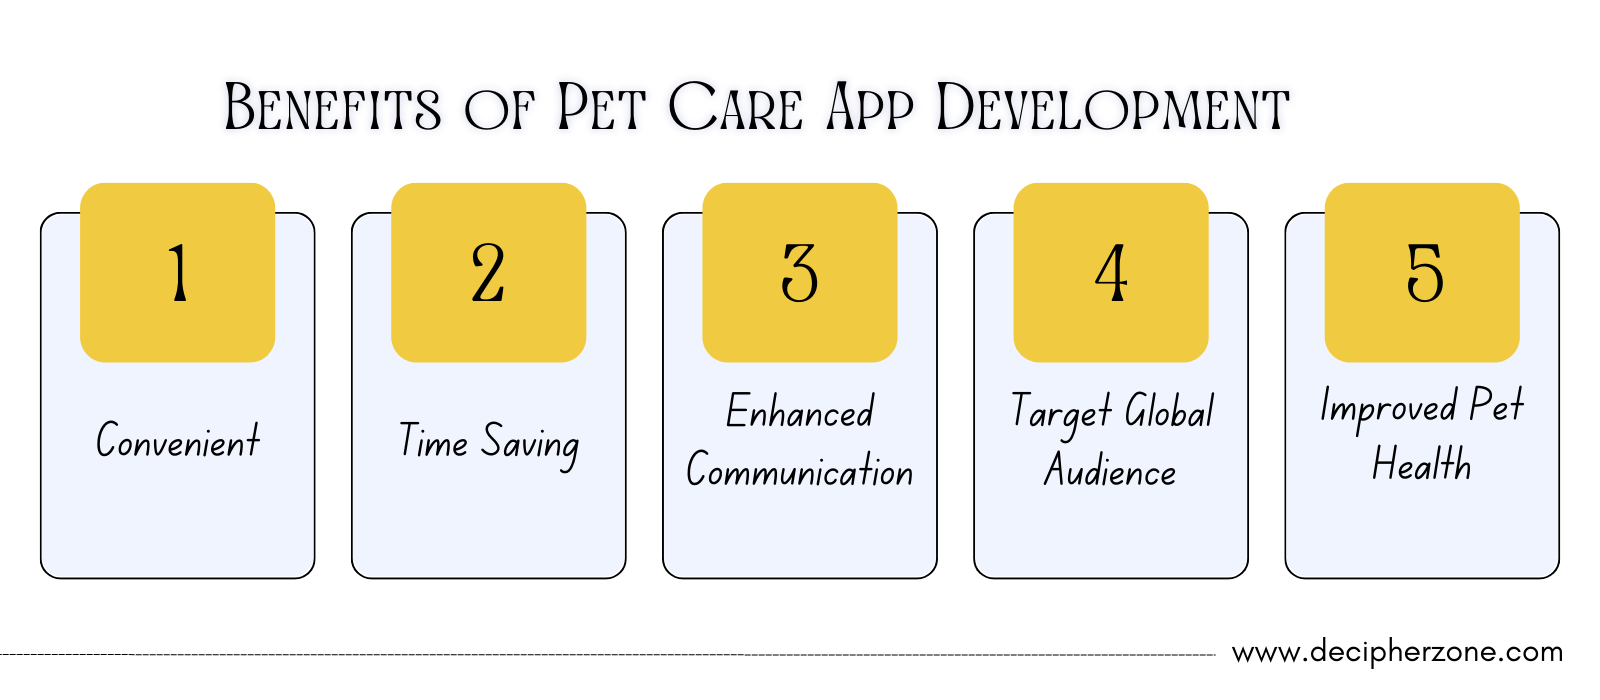 Benefits of Pet Care App Development